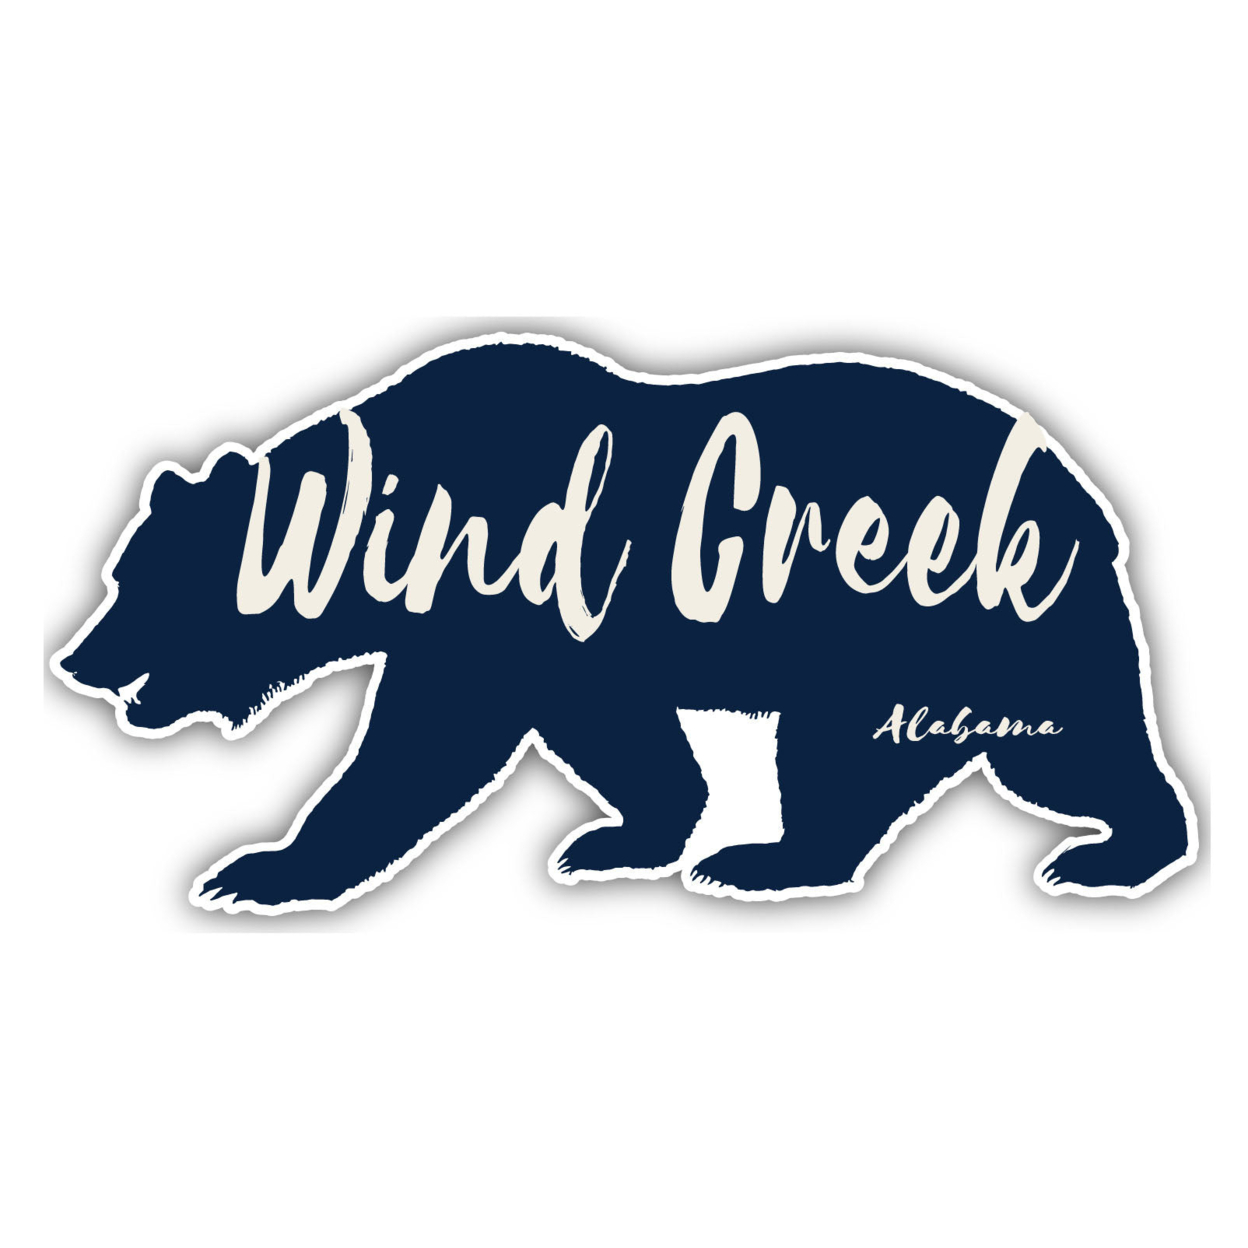 Wind Creek Alabama Souvenir Decorative Stickers (Choose Theme And Size) - Single Unit, 4-Inch, Bear